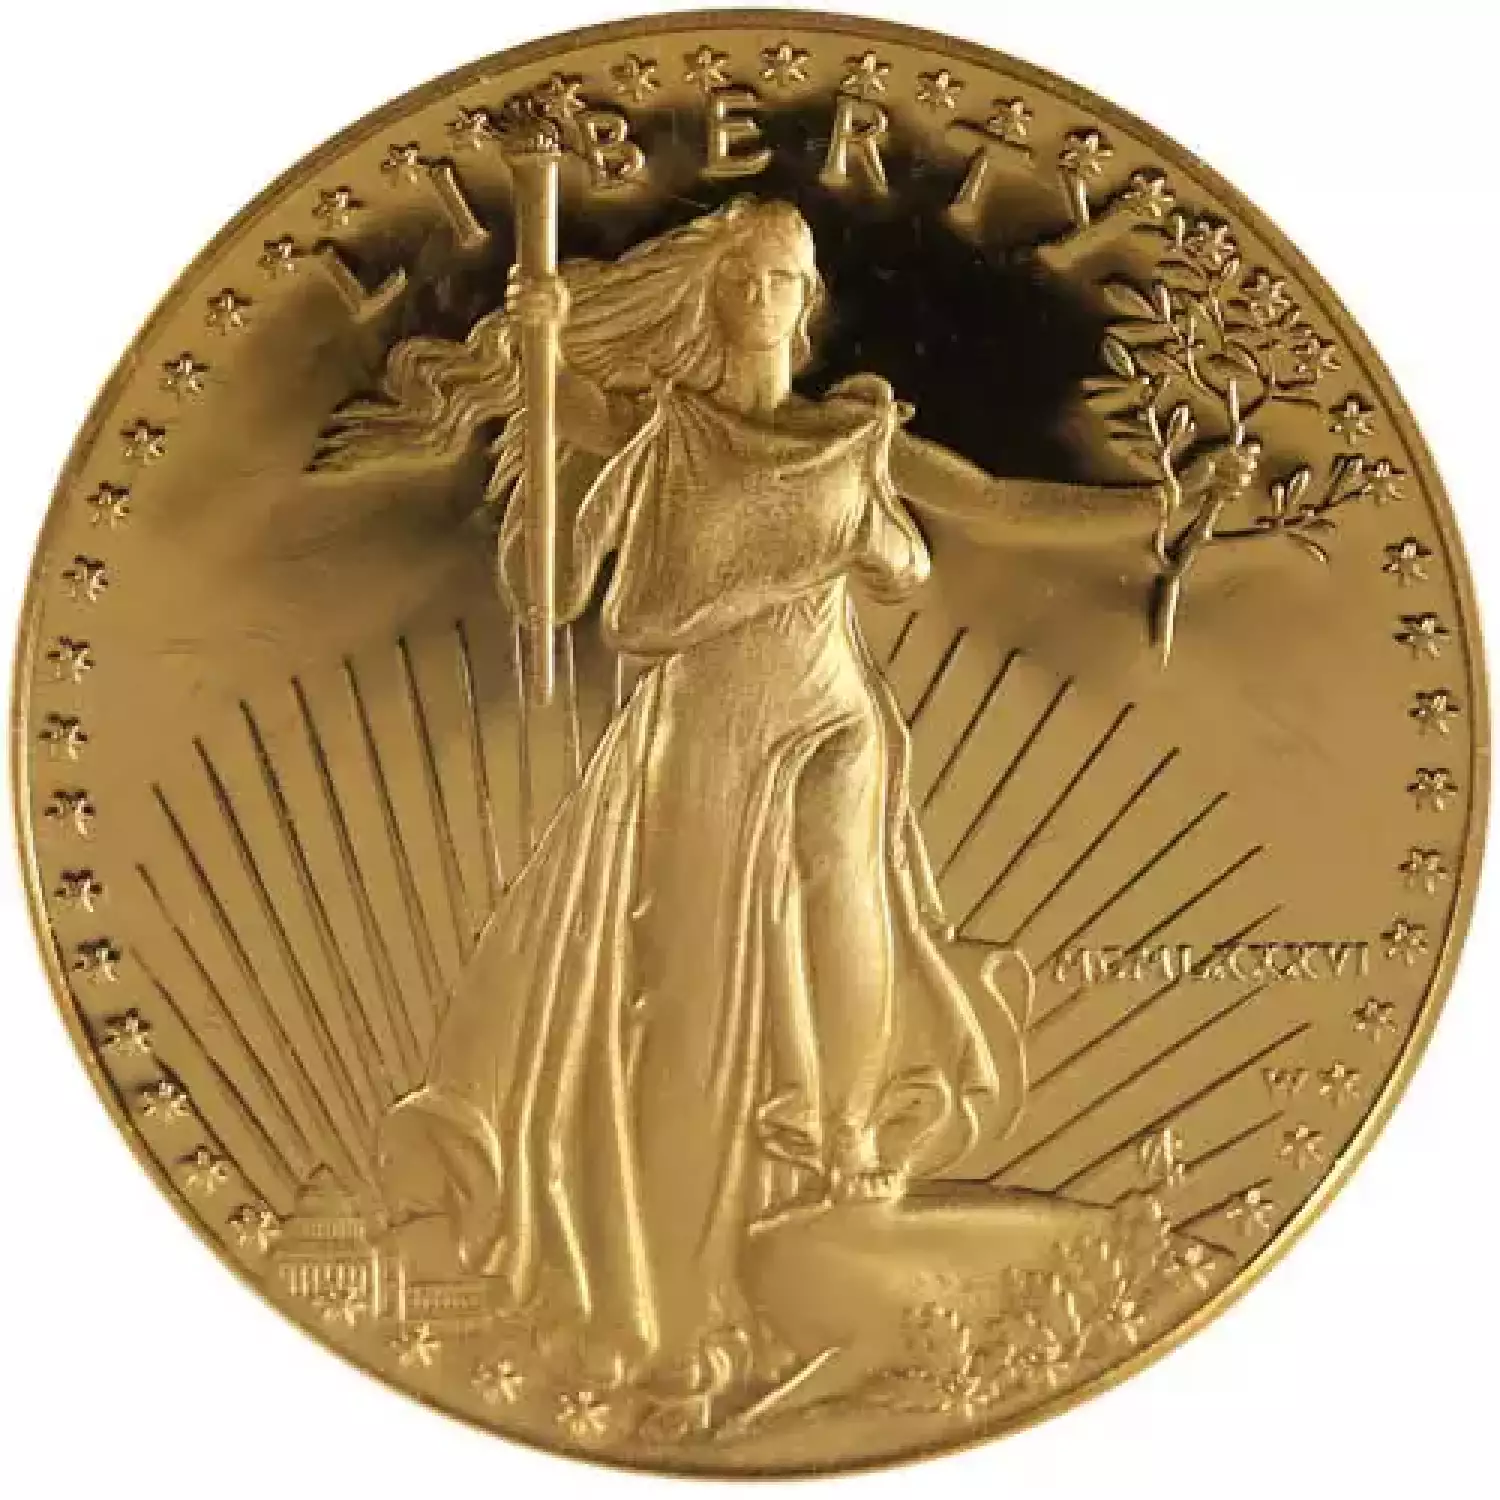 1986-W 1 oz Proof American Gold Eagle Coin (Box + CoA)